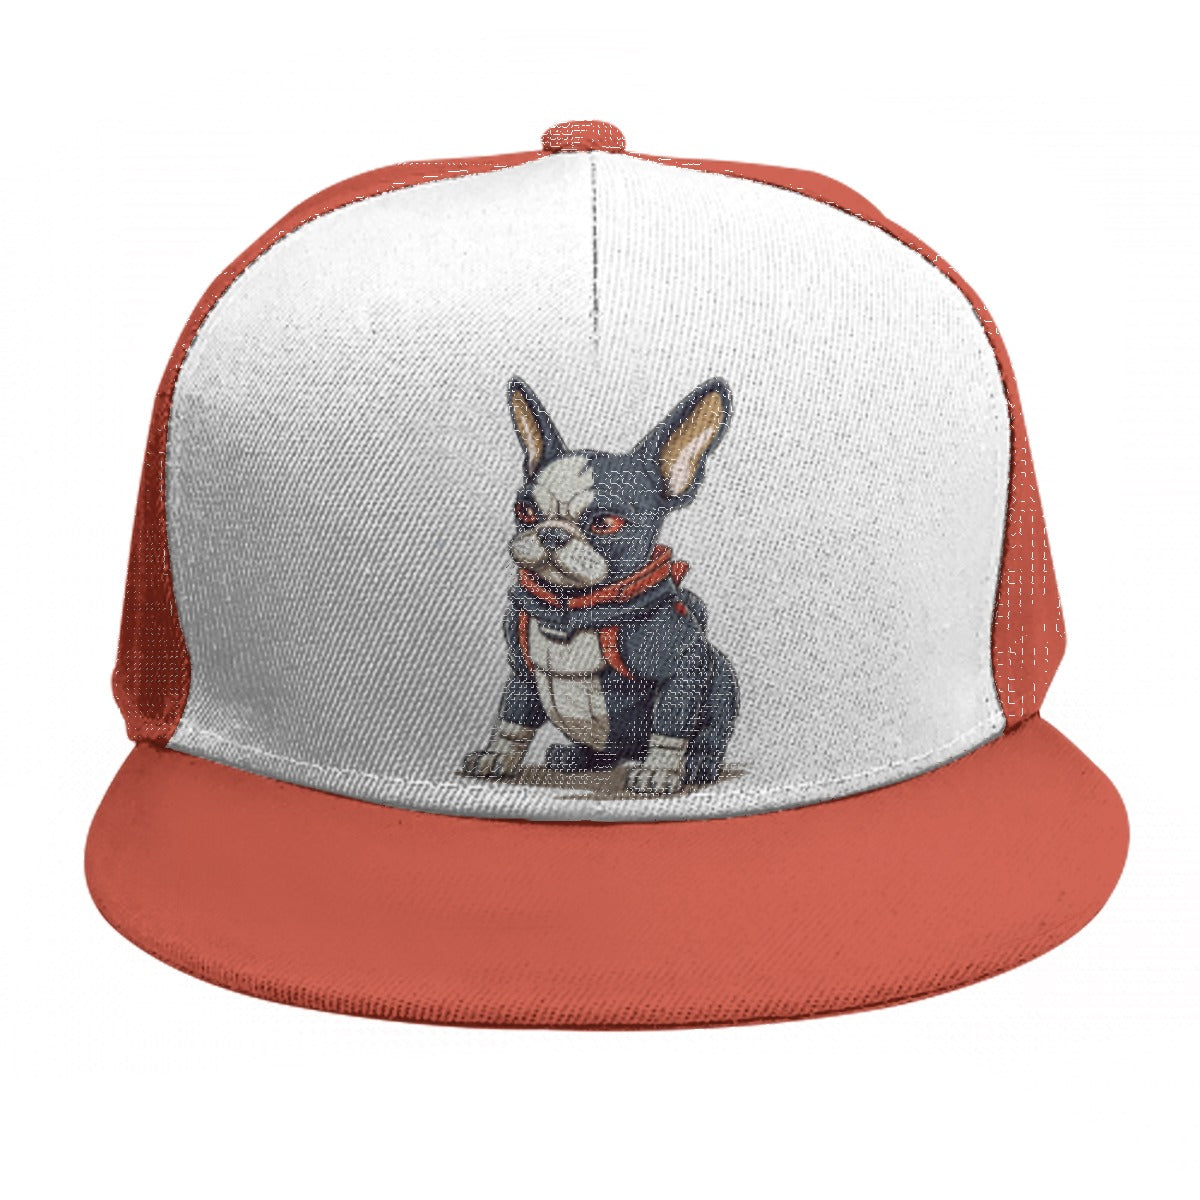 Adorable Frenchie-Themed Unisex Baseball Cap